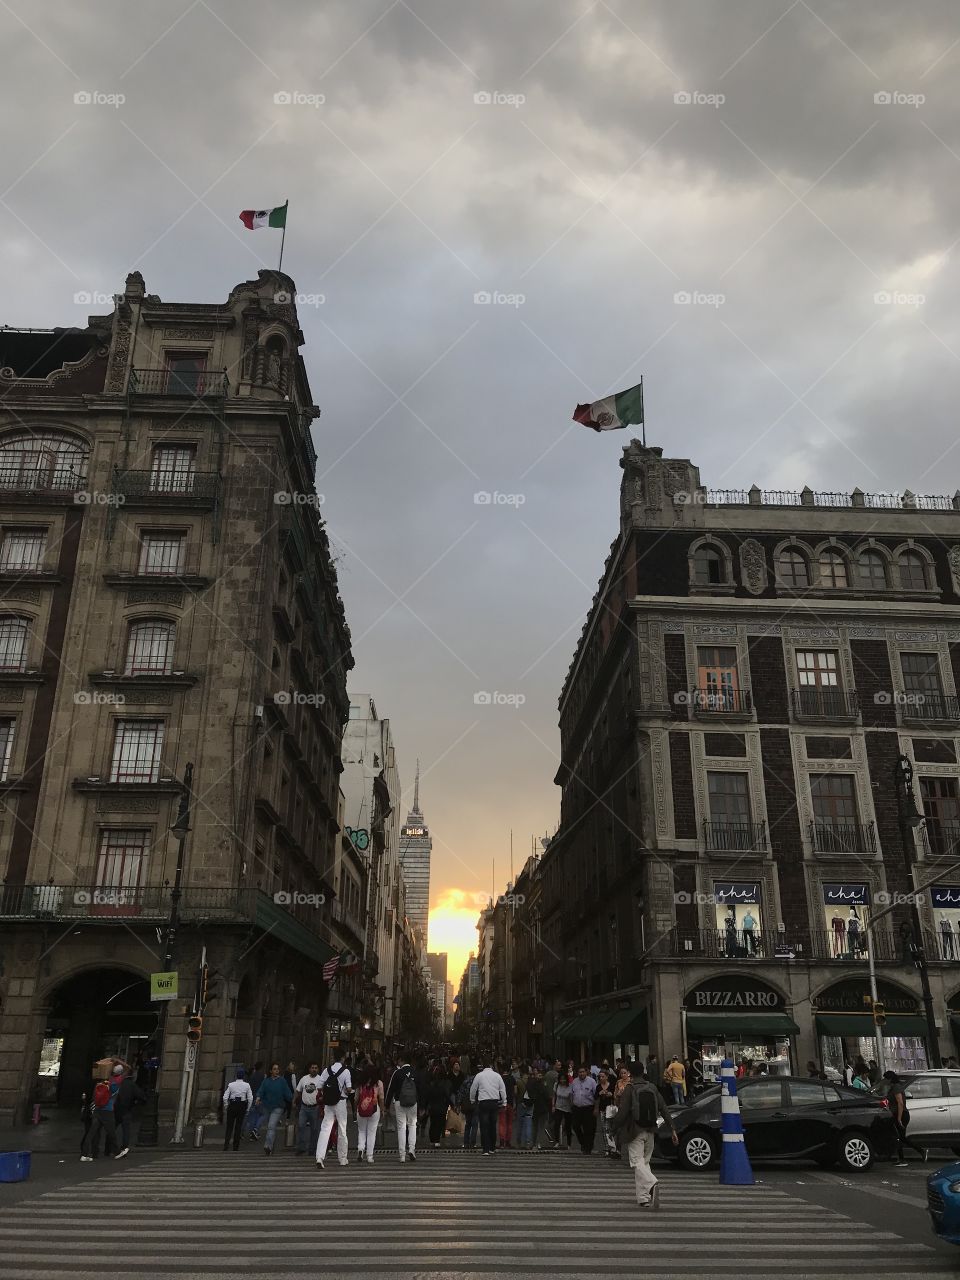 Sky on fire - Mexico City 18:11